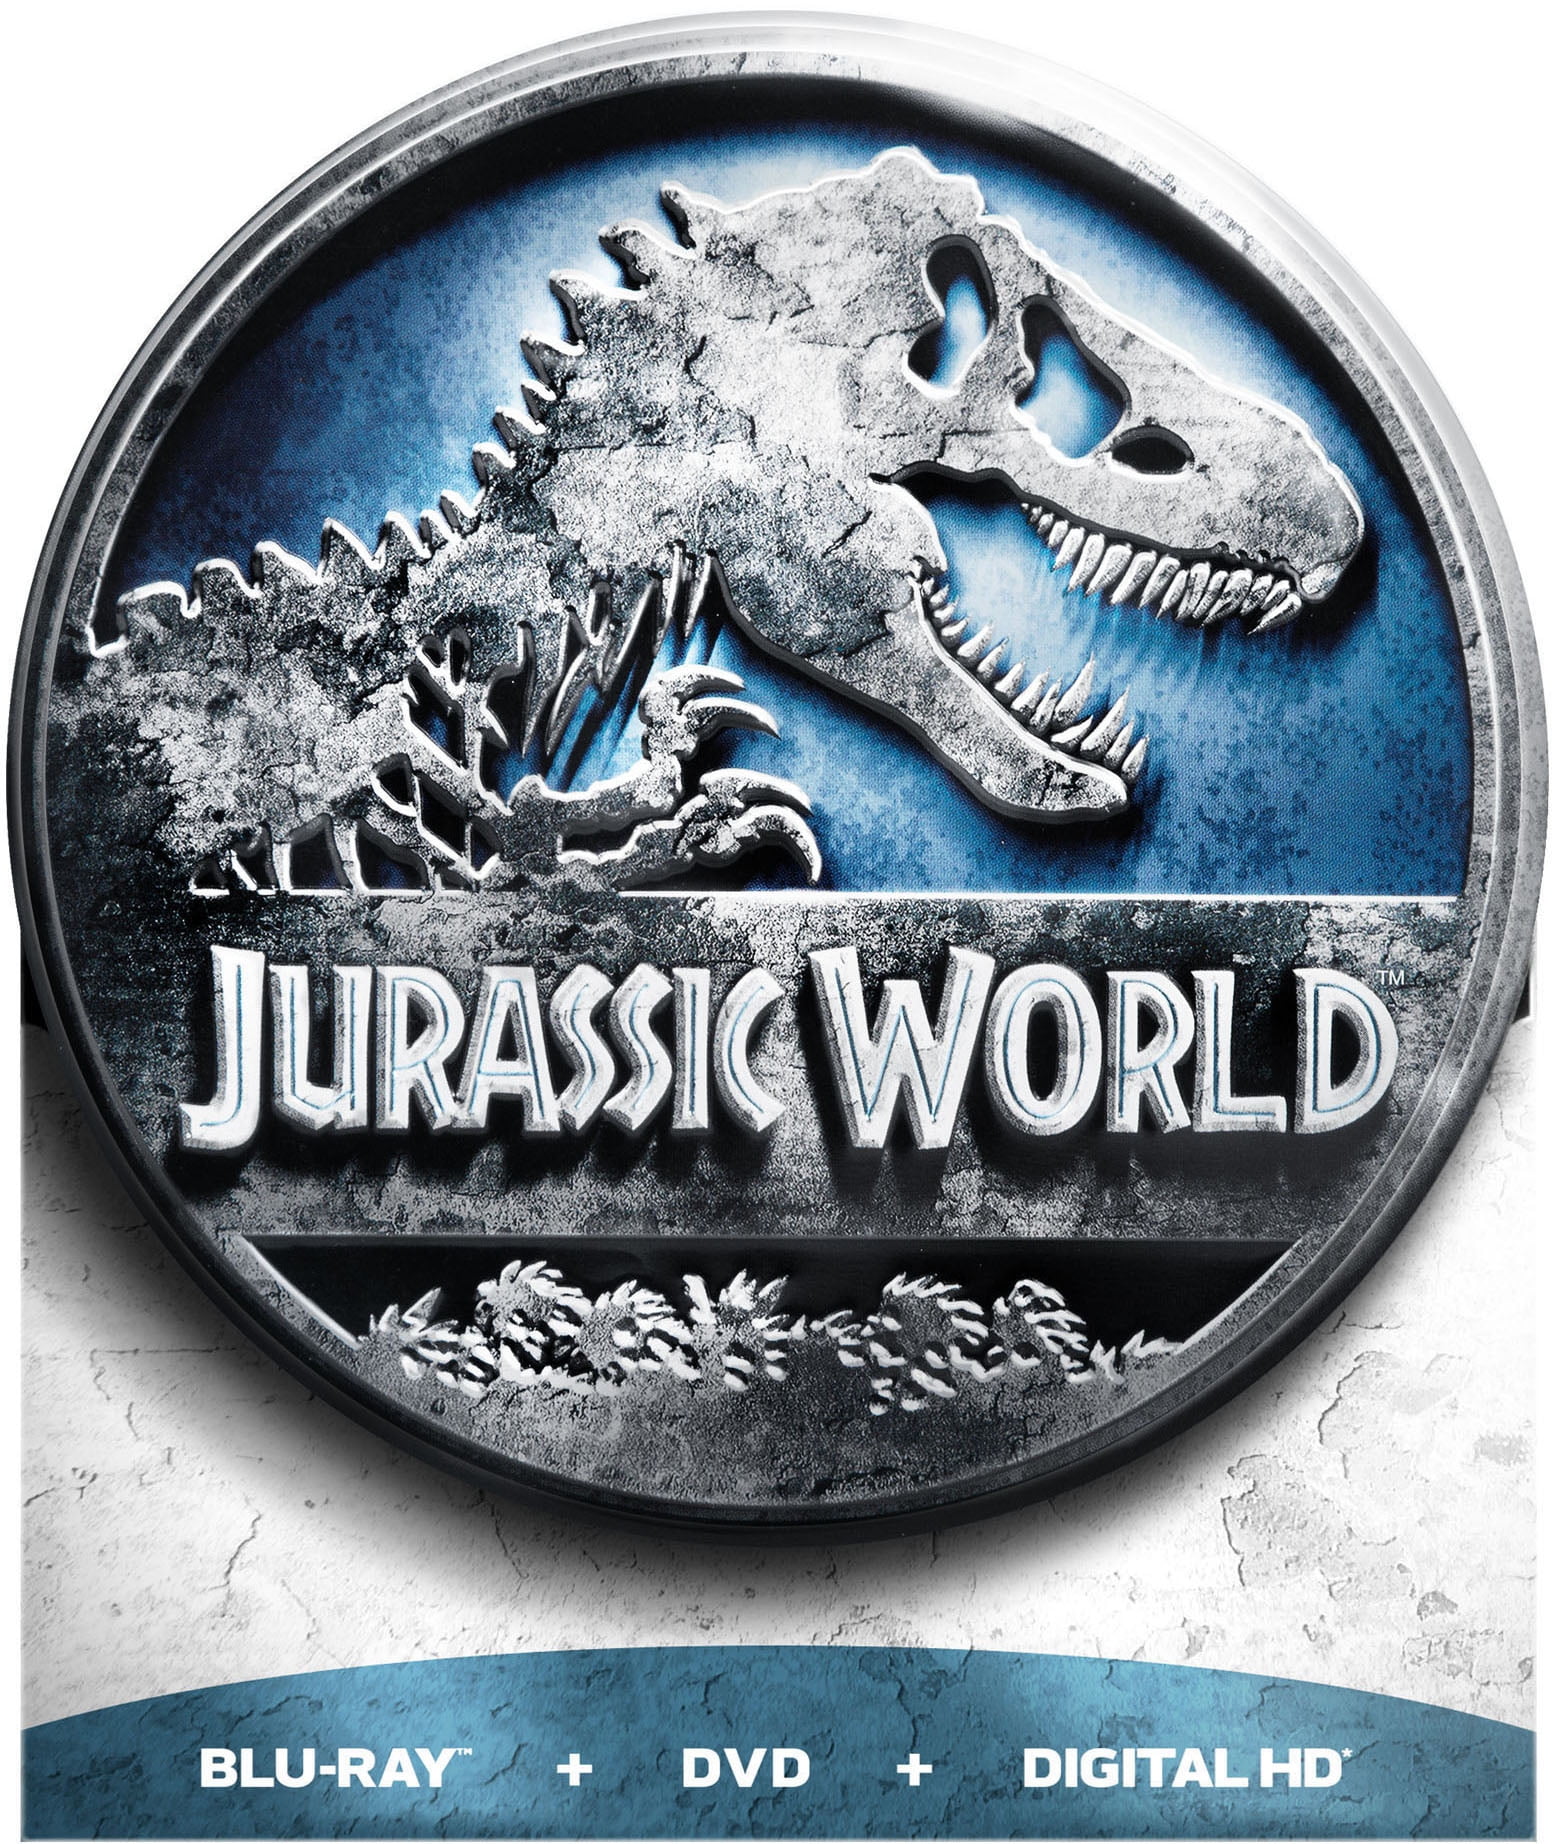 Jurassic Park Trilogy (4K UHD + BD +UV) [Blu-ray] [2018] [Region Free]